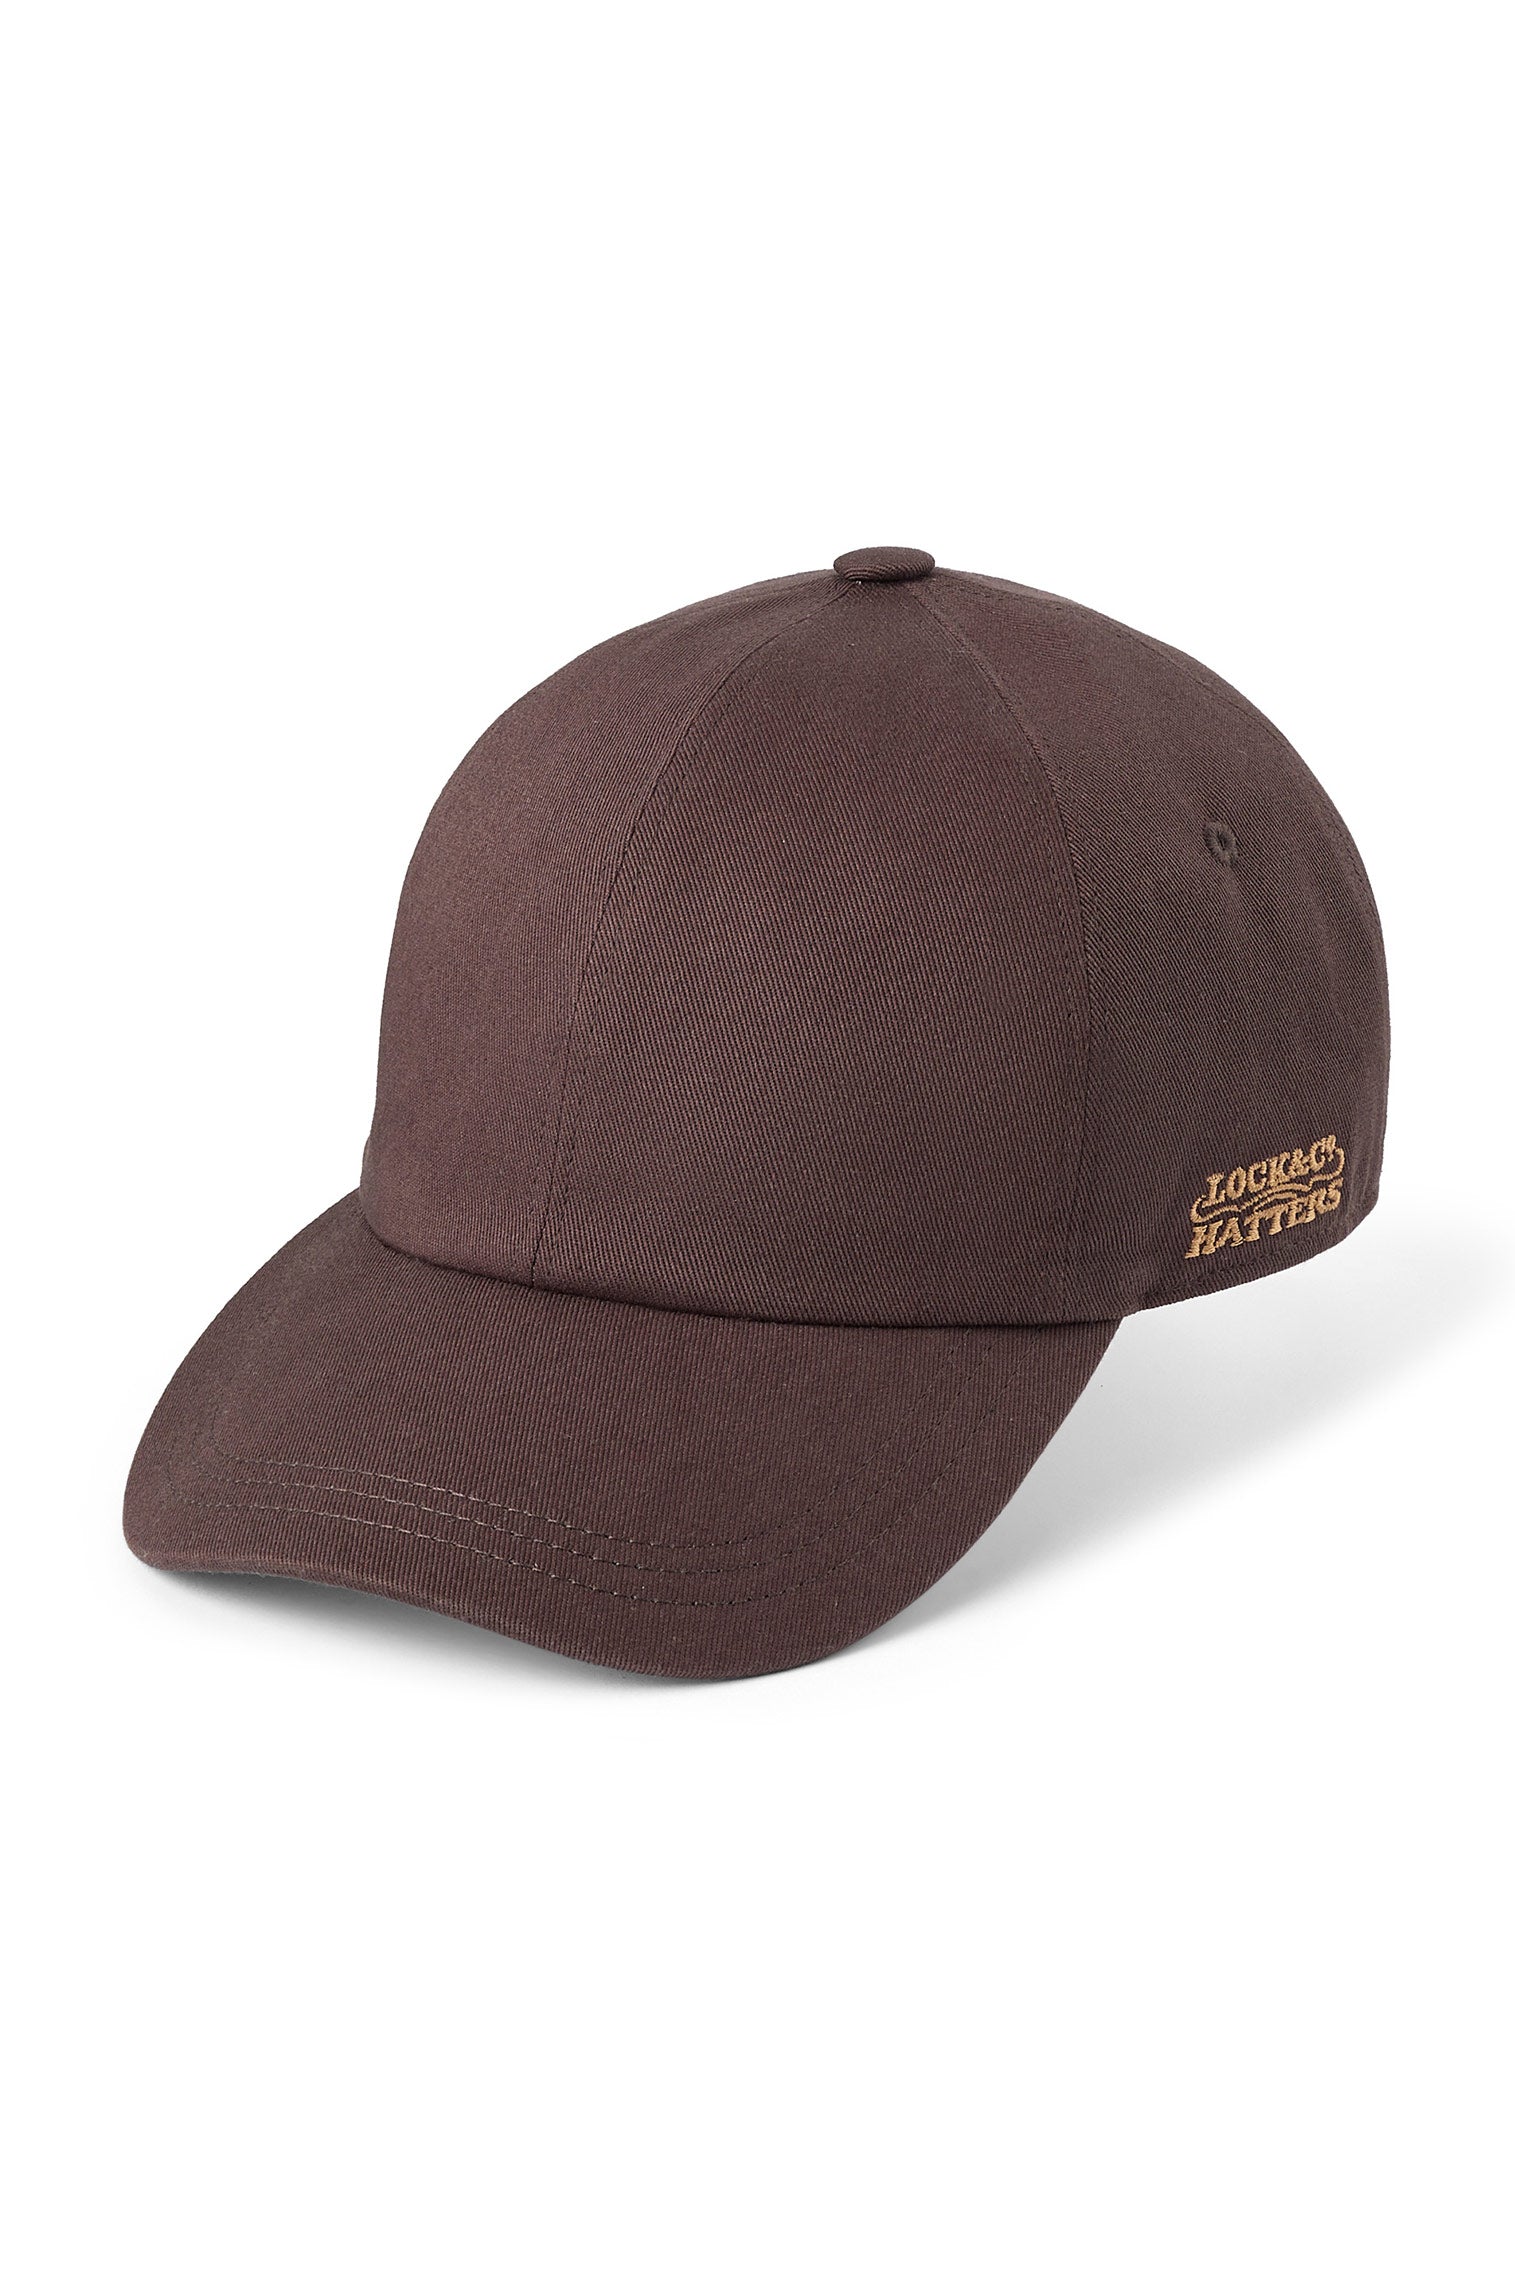 Adjustable Brown Baseball Cap - New Season Hat Collection - Lock & Co. Hatters London UK